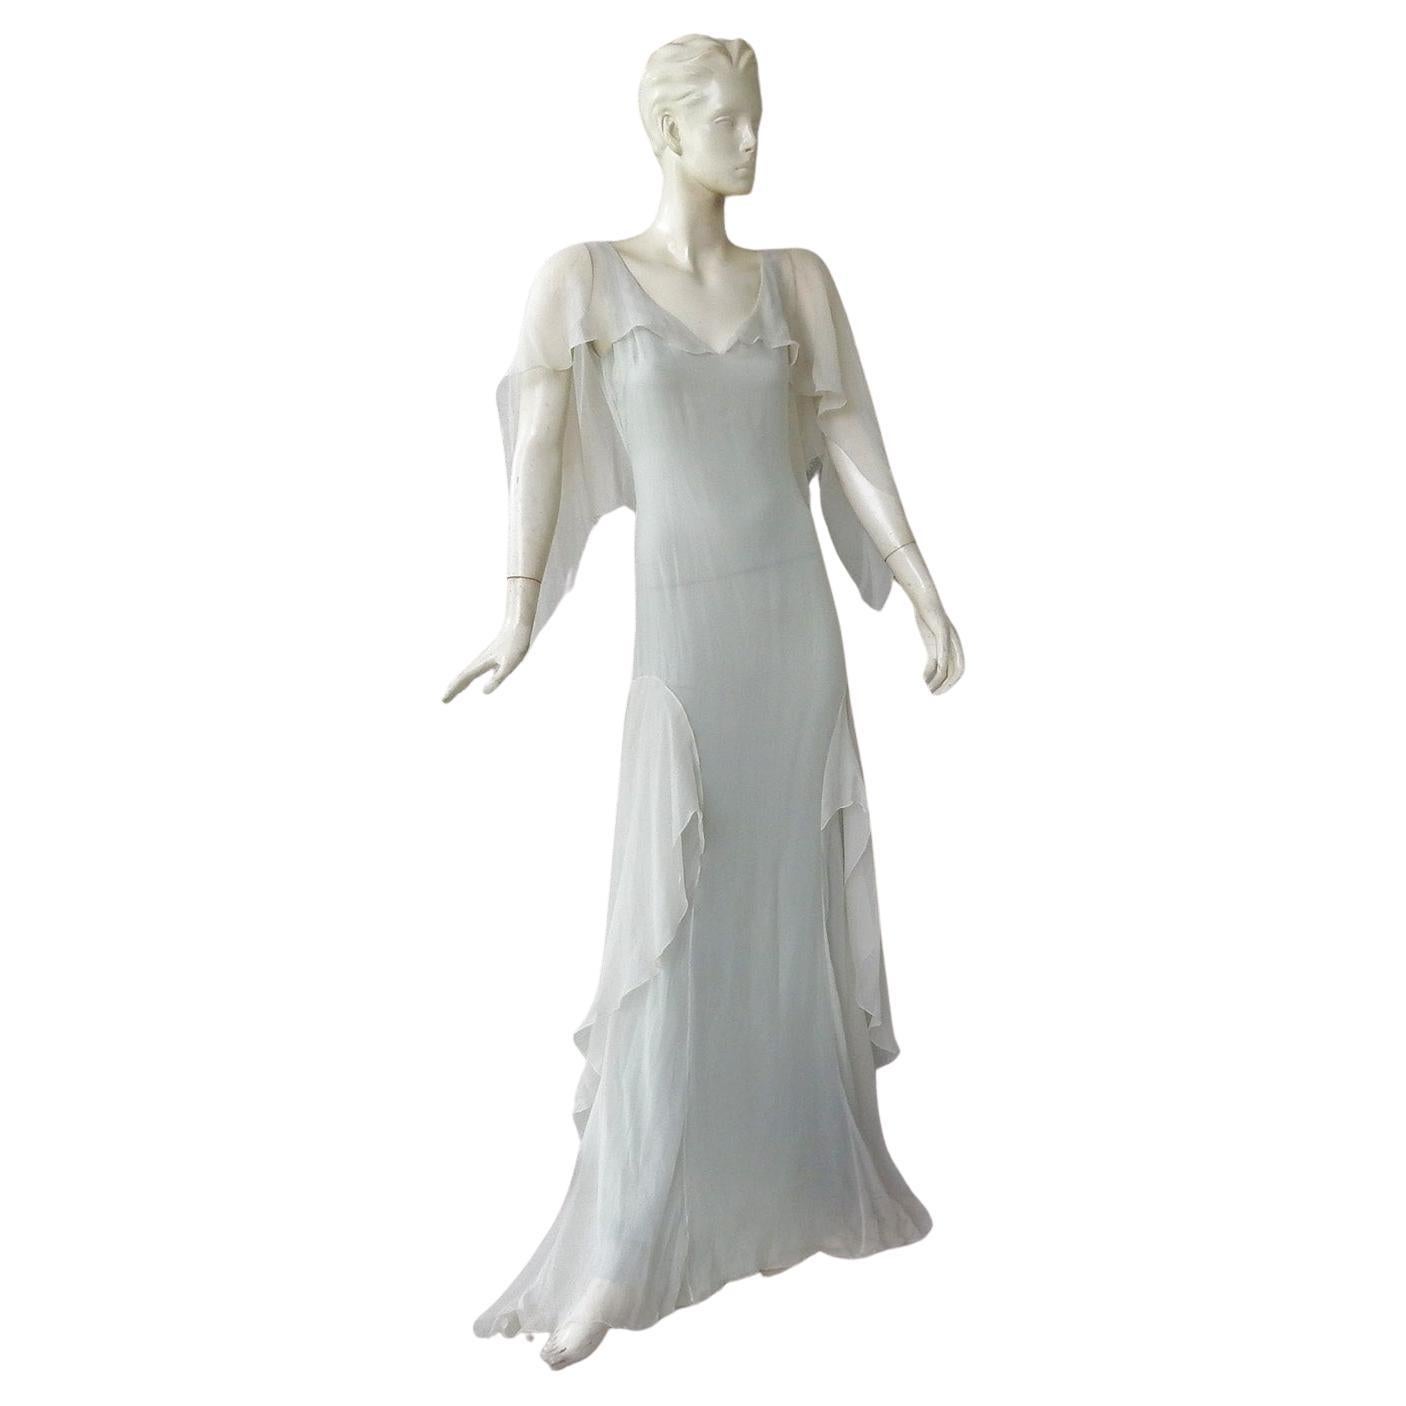 Emanuel Ungaro Ethereal Silk Chiffon Bias Cut Dress Gown For Sale